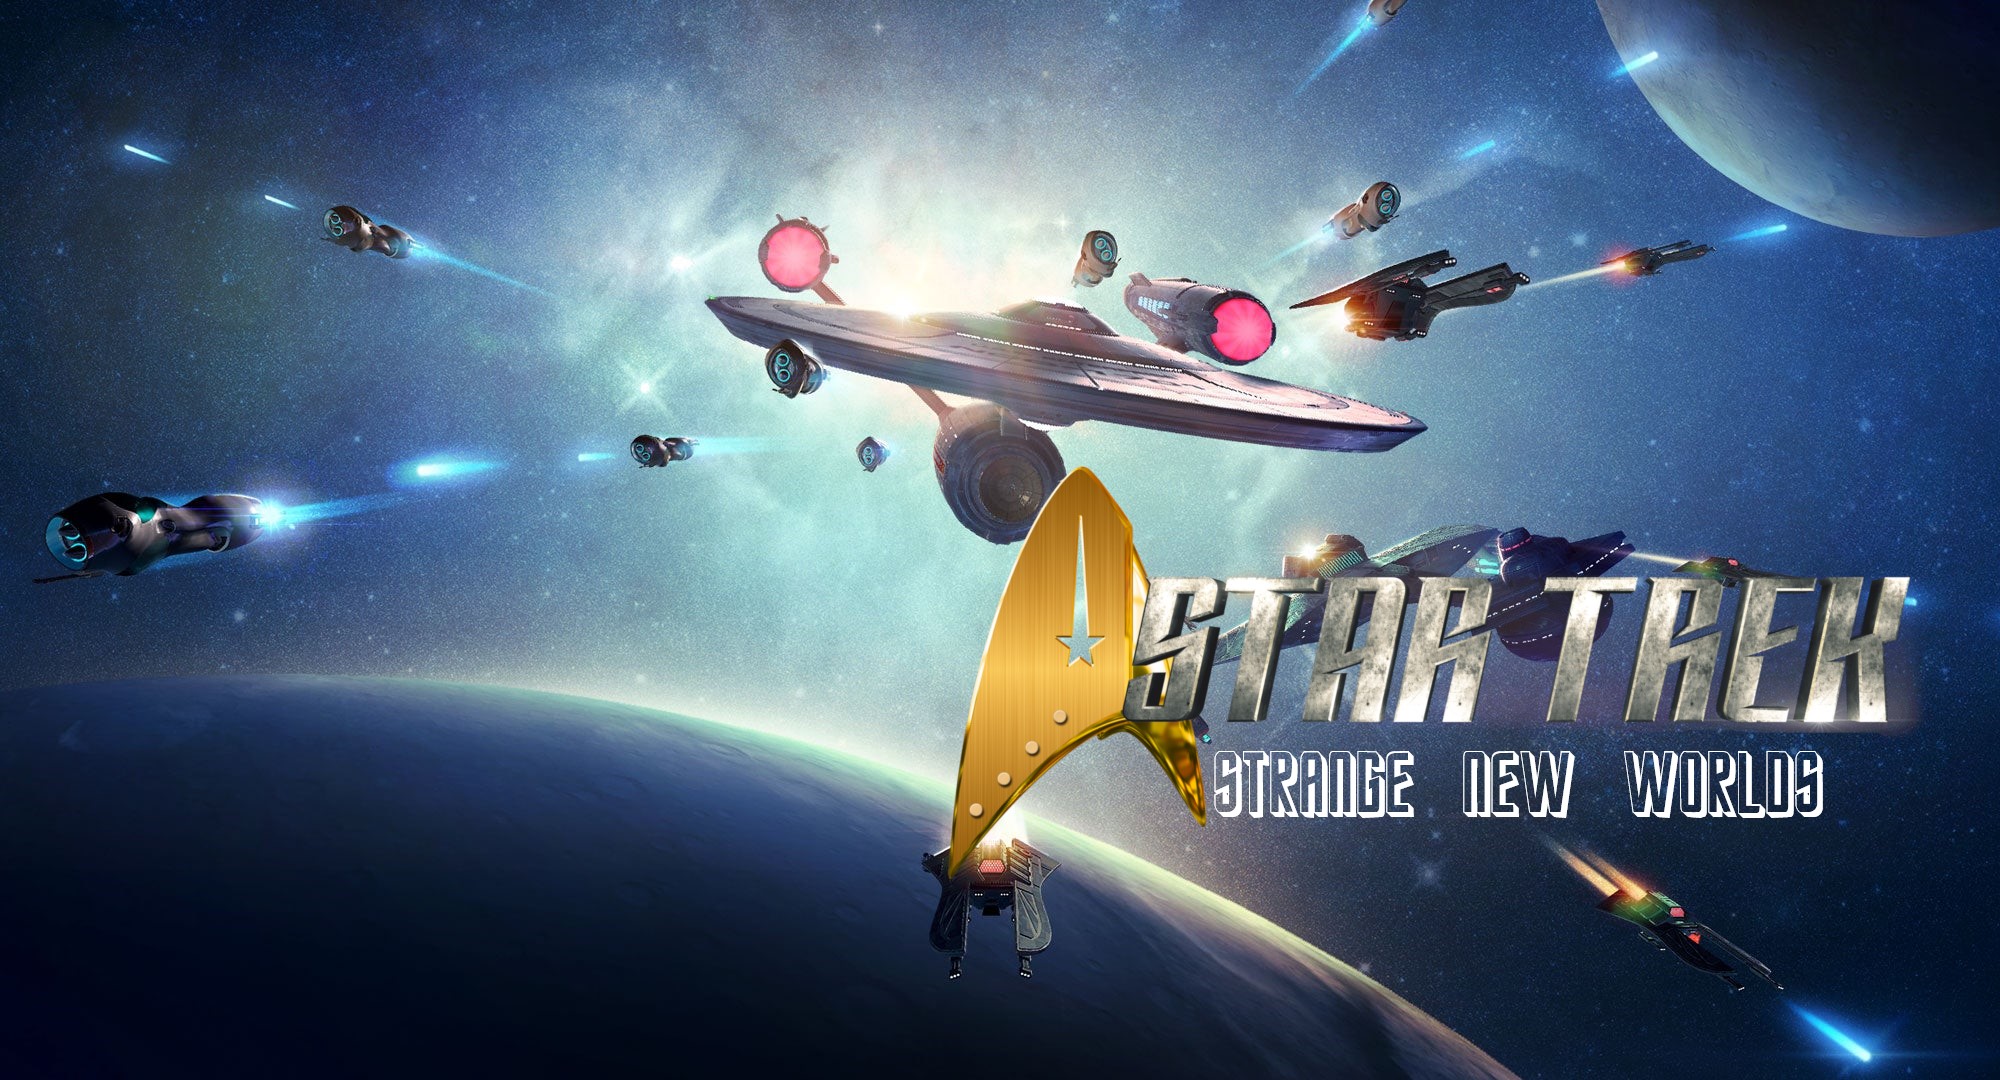 Star Trek Strange New Worlds movie space planets and alien image HD  wallpaper download